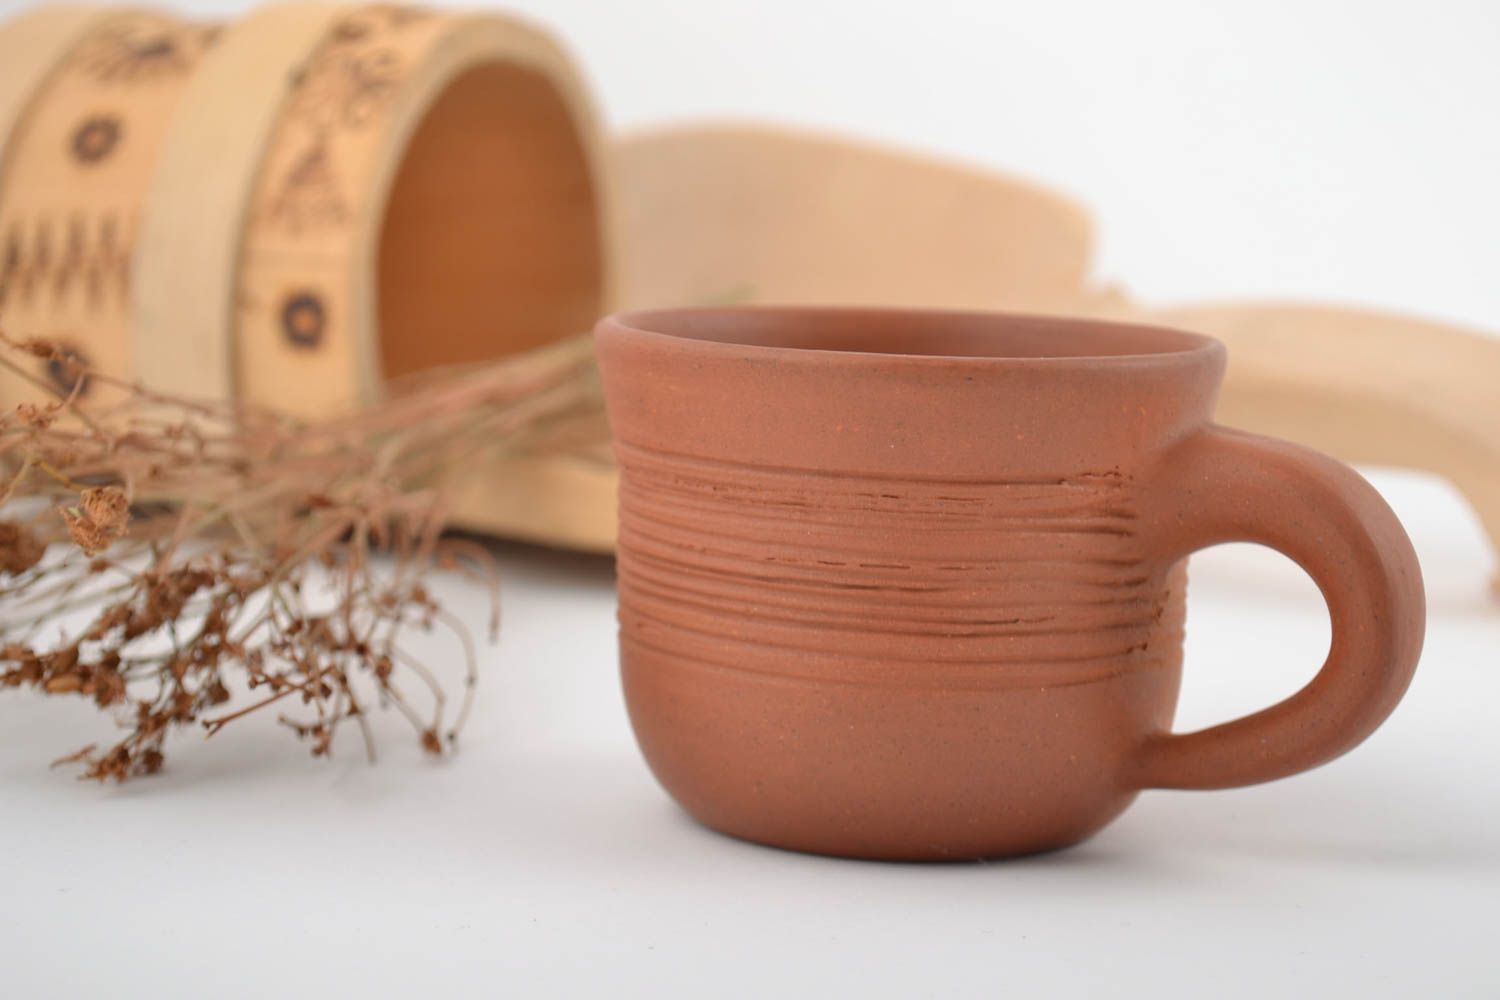 Petite tasse originale brune faite main 15 cl vaisselle écologique ethnique photo 1